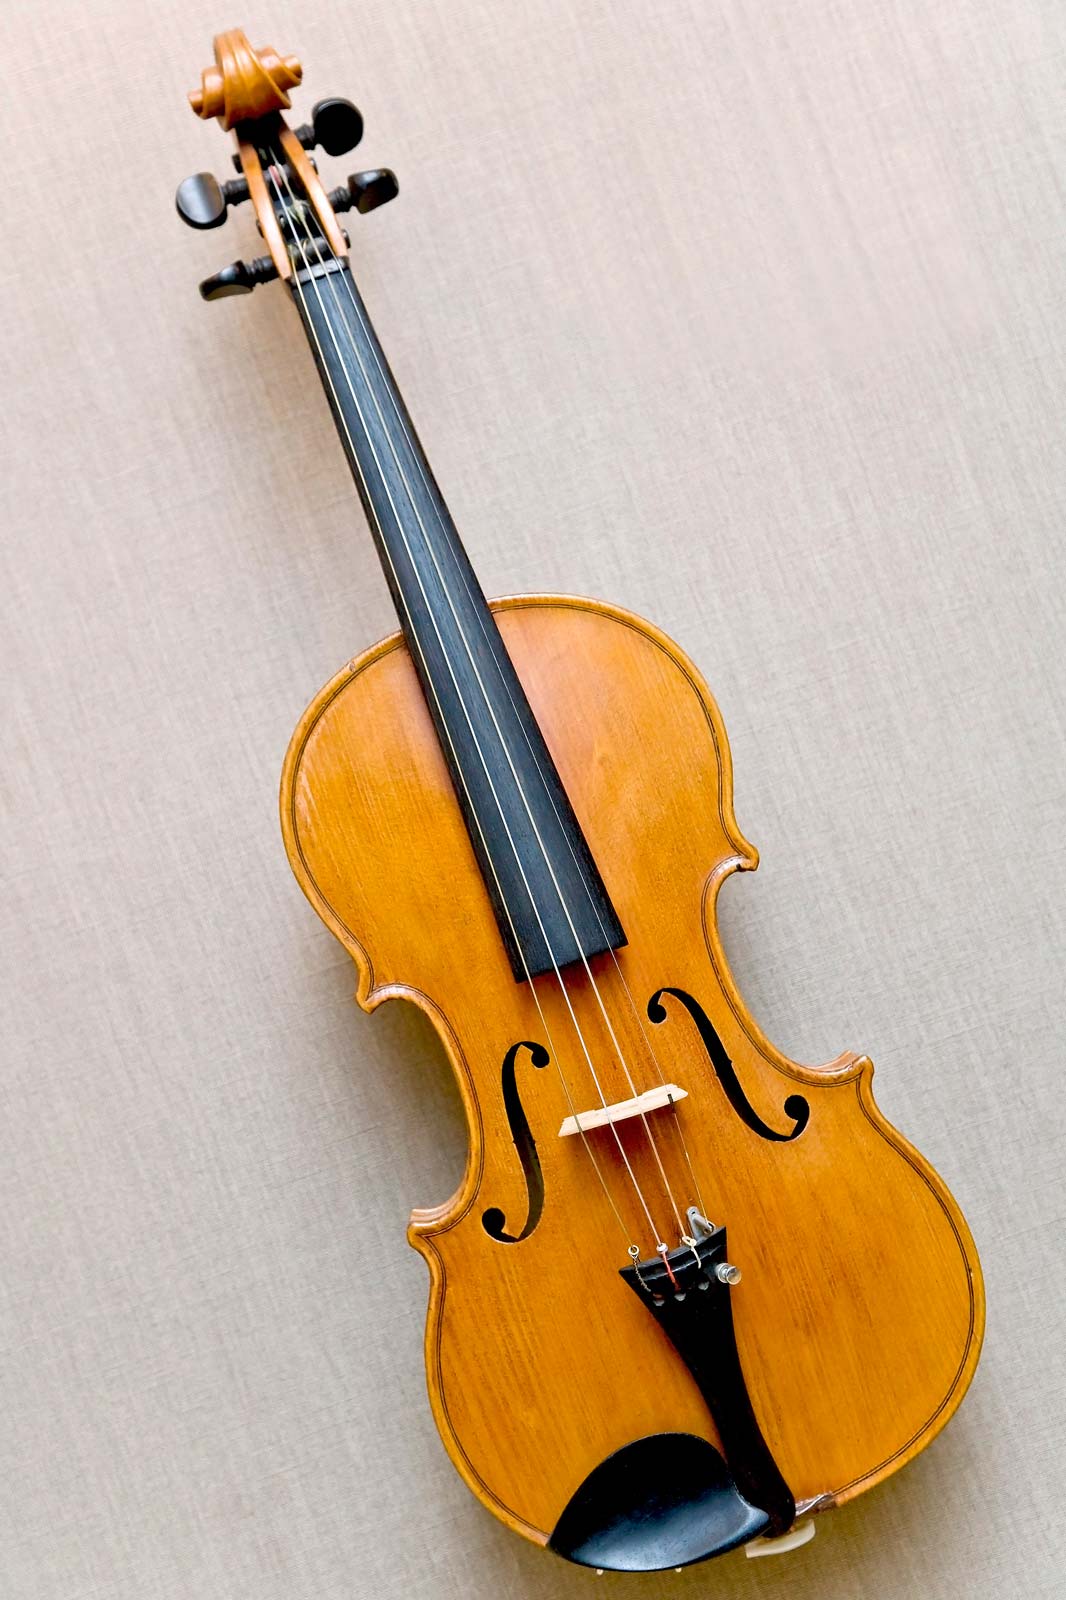 National instrument of Austria - Violin